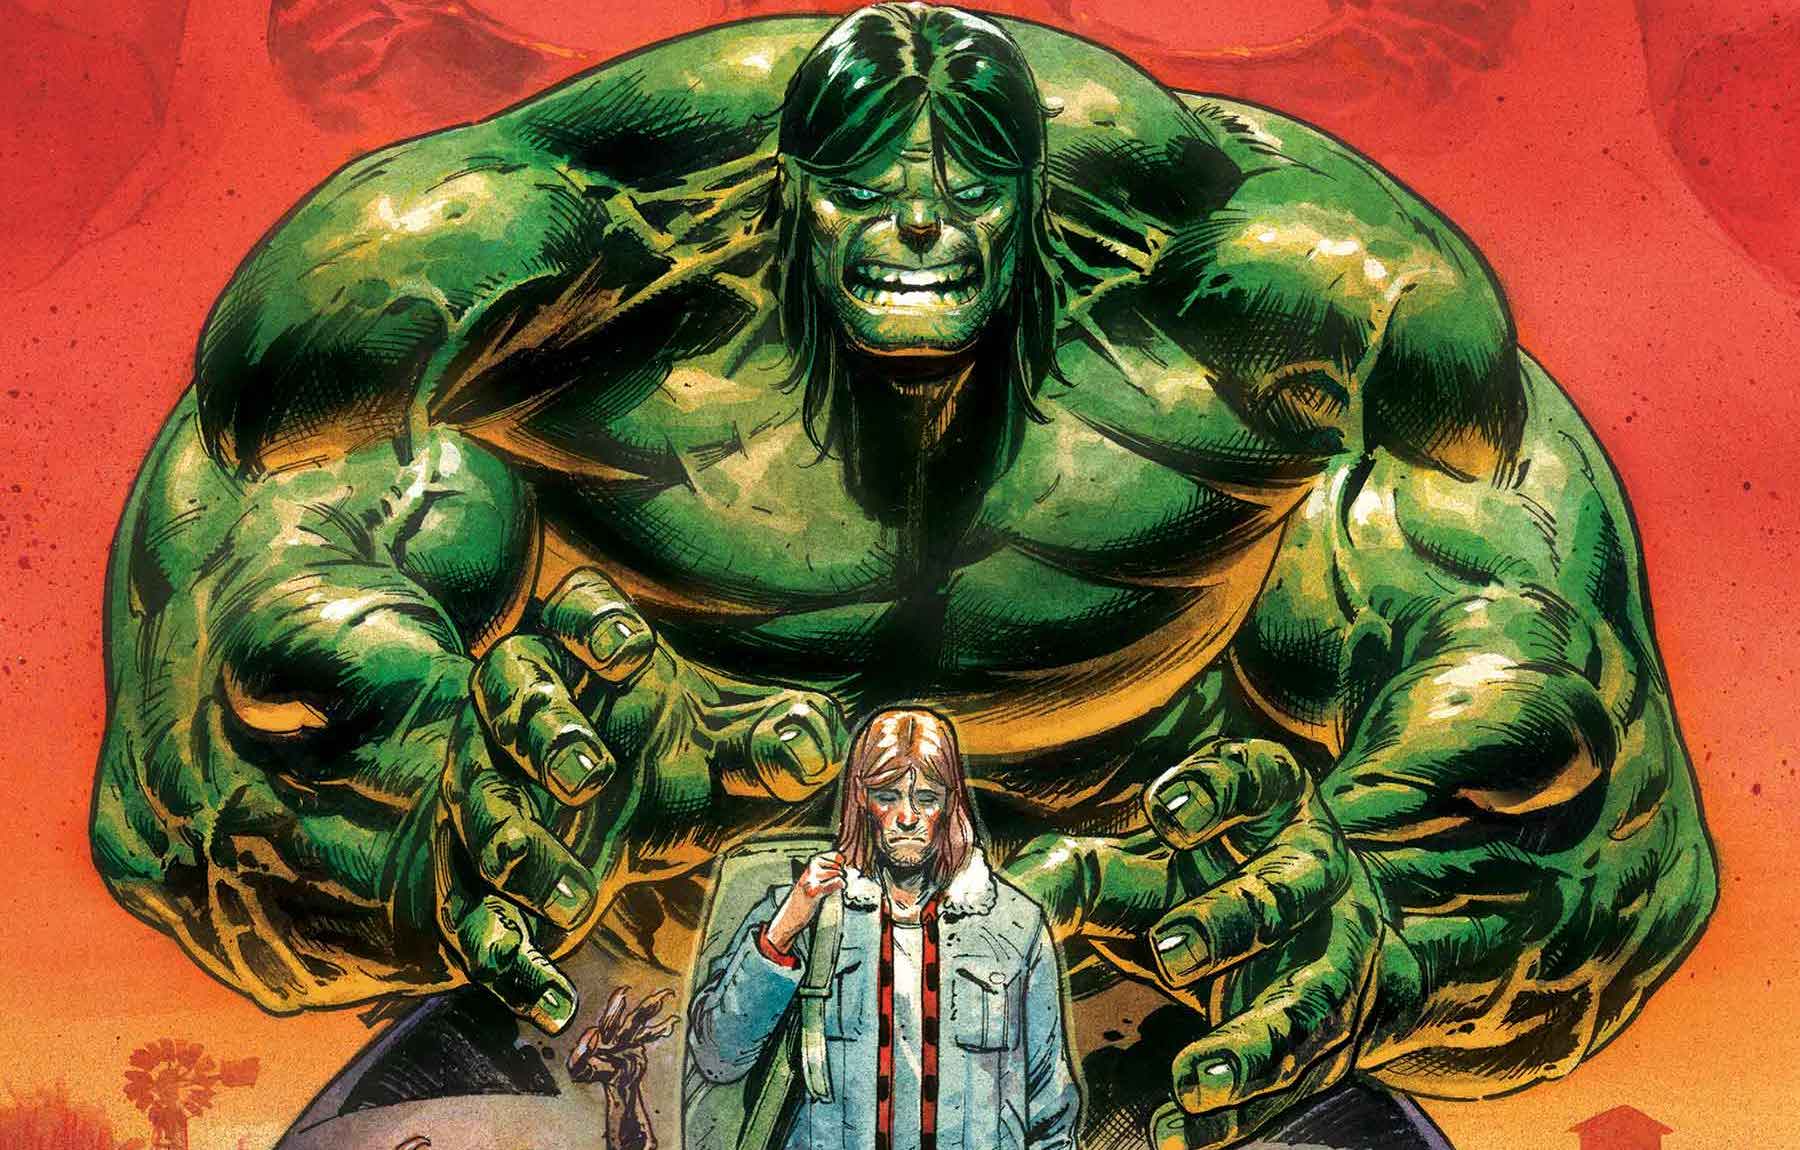 New 'Incredible Hulk' creative team announced: Phillip Kennedy Johnson and artist Nic Klein